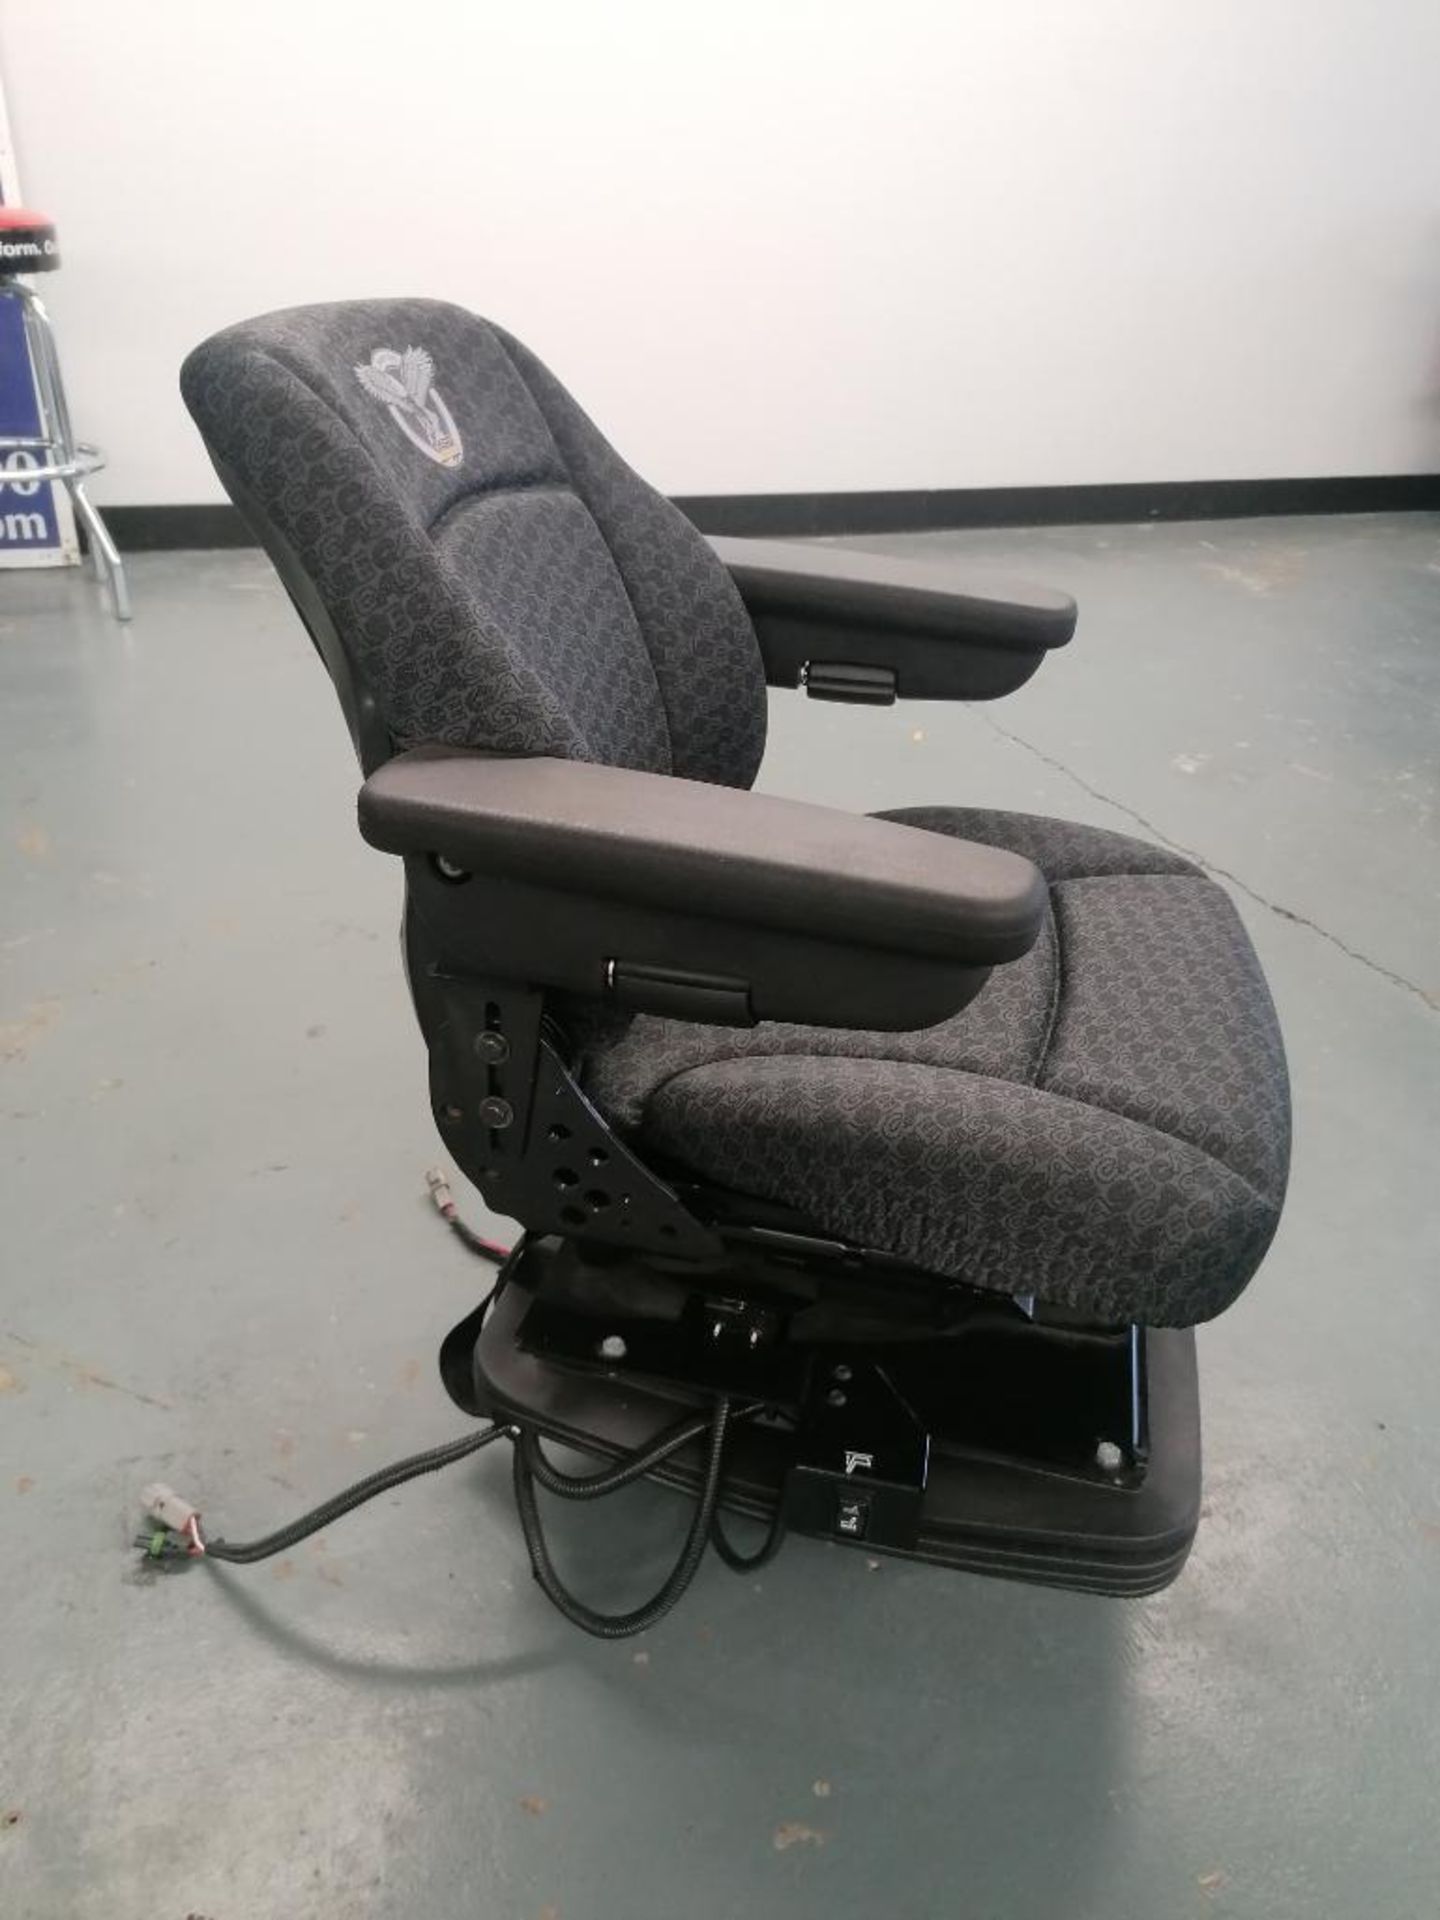 CNH Air Suspension Seat for Case Dozer, Serial #007081847681. Located in Mt. Pleasant, IA. - Image 2 of 11